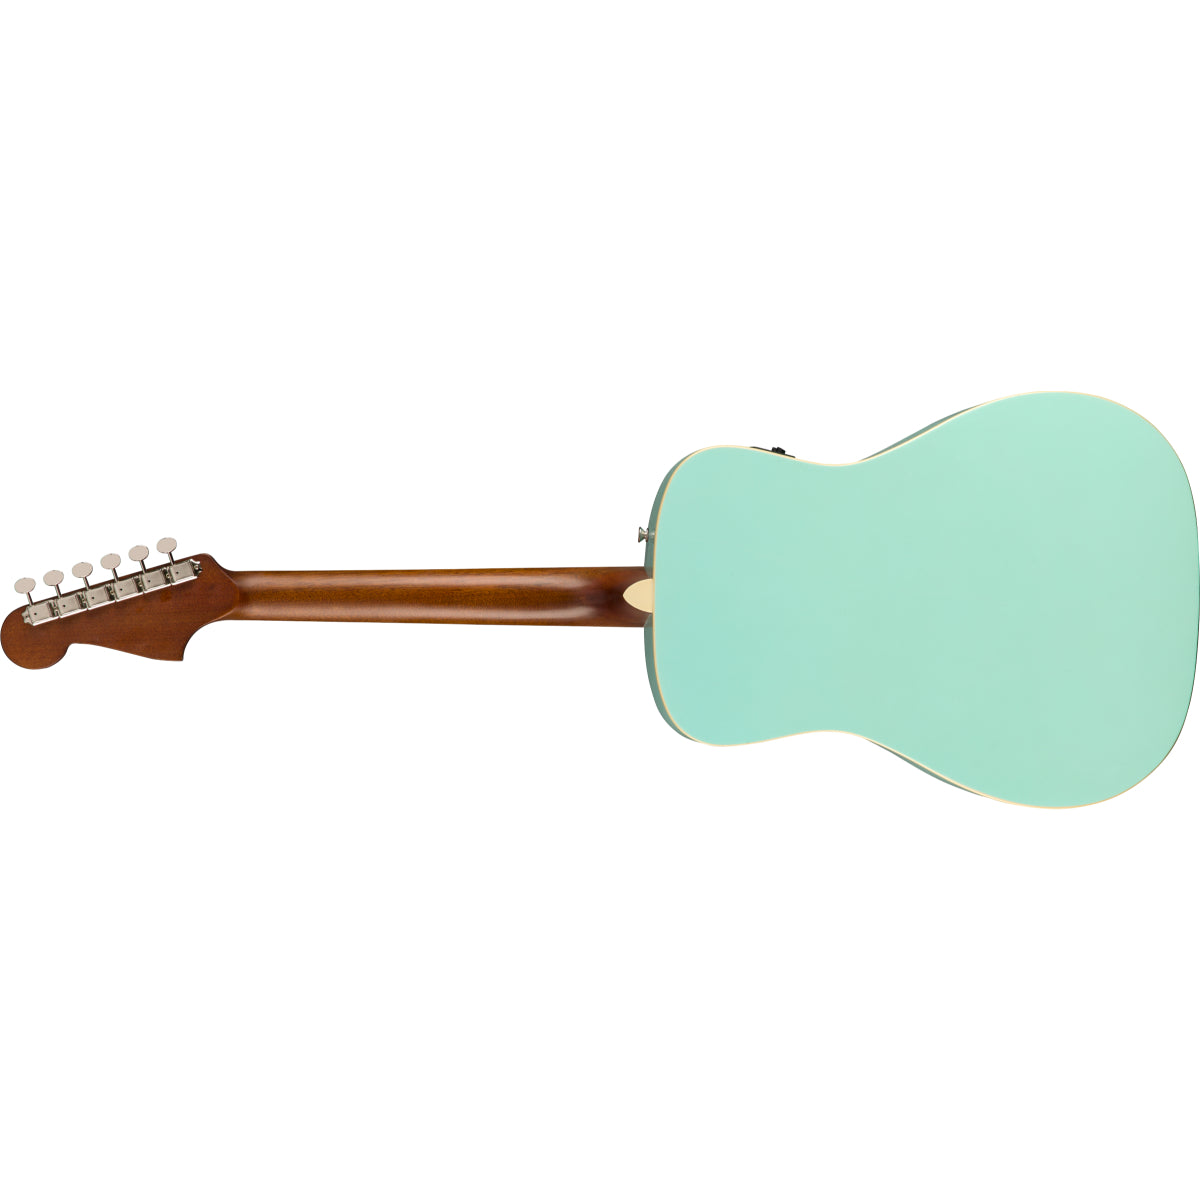 Malibu Player Aqua Splash Electro-Acoustic Guitar